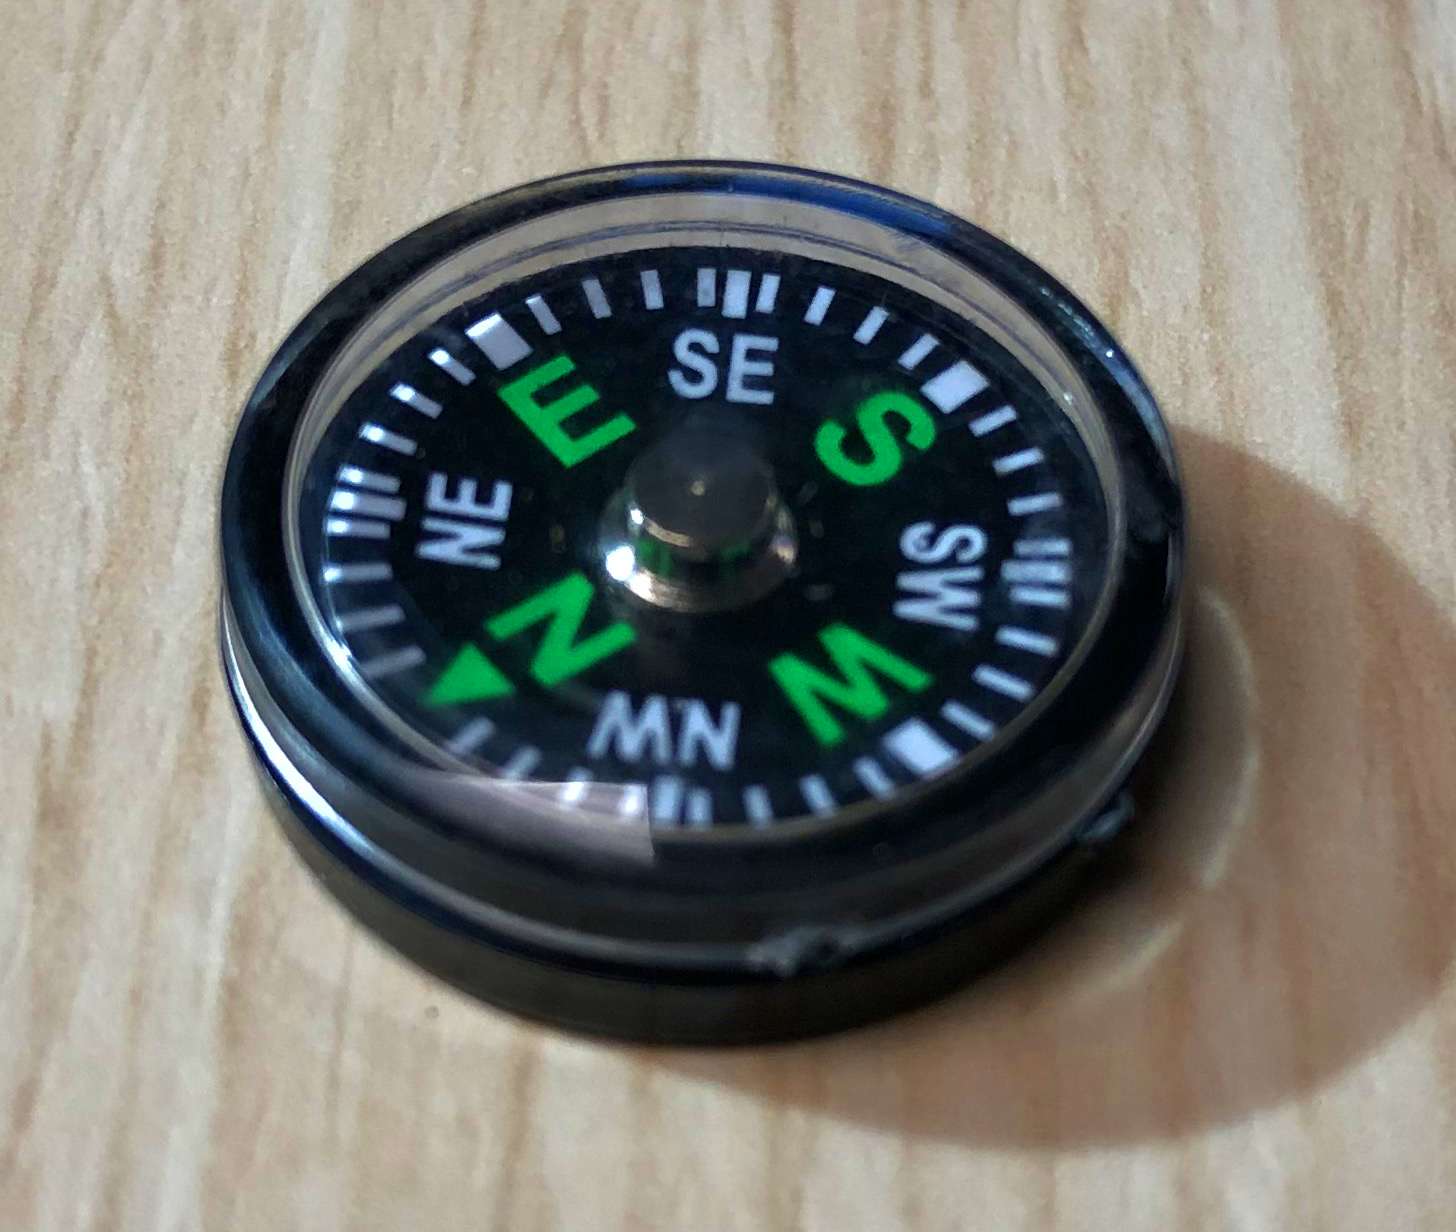 Survival Button Compass